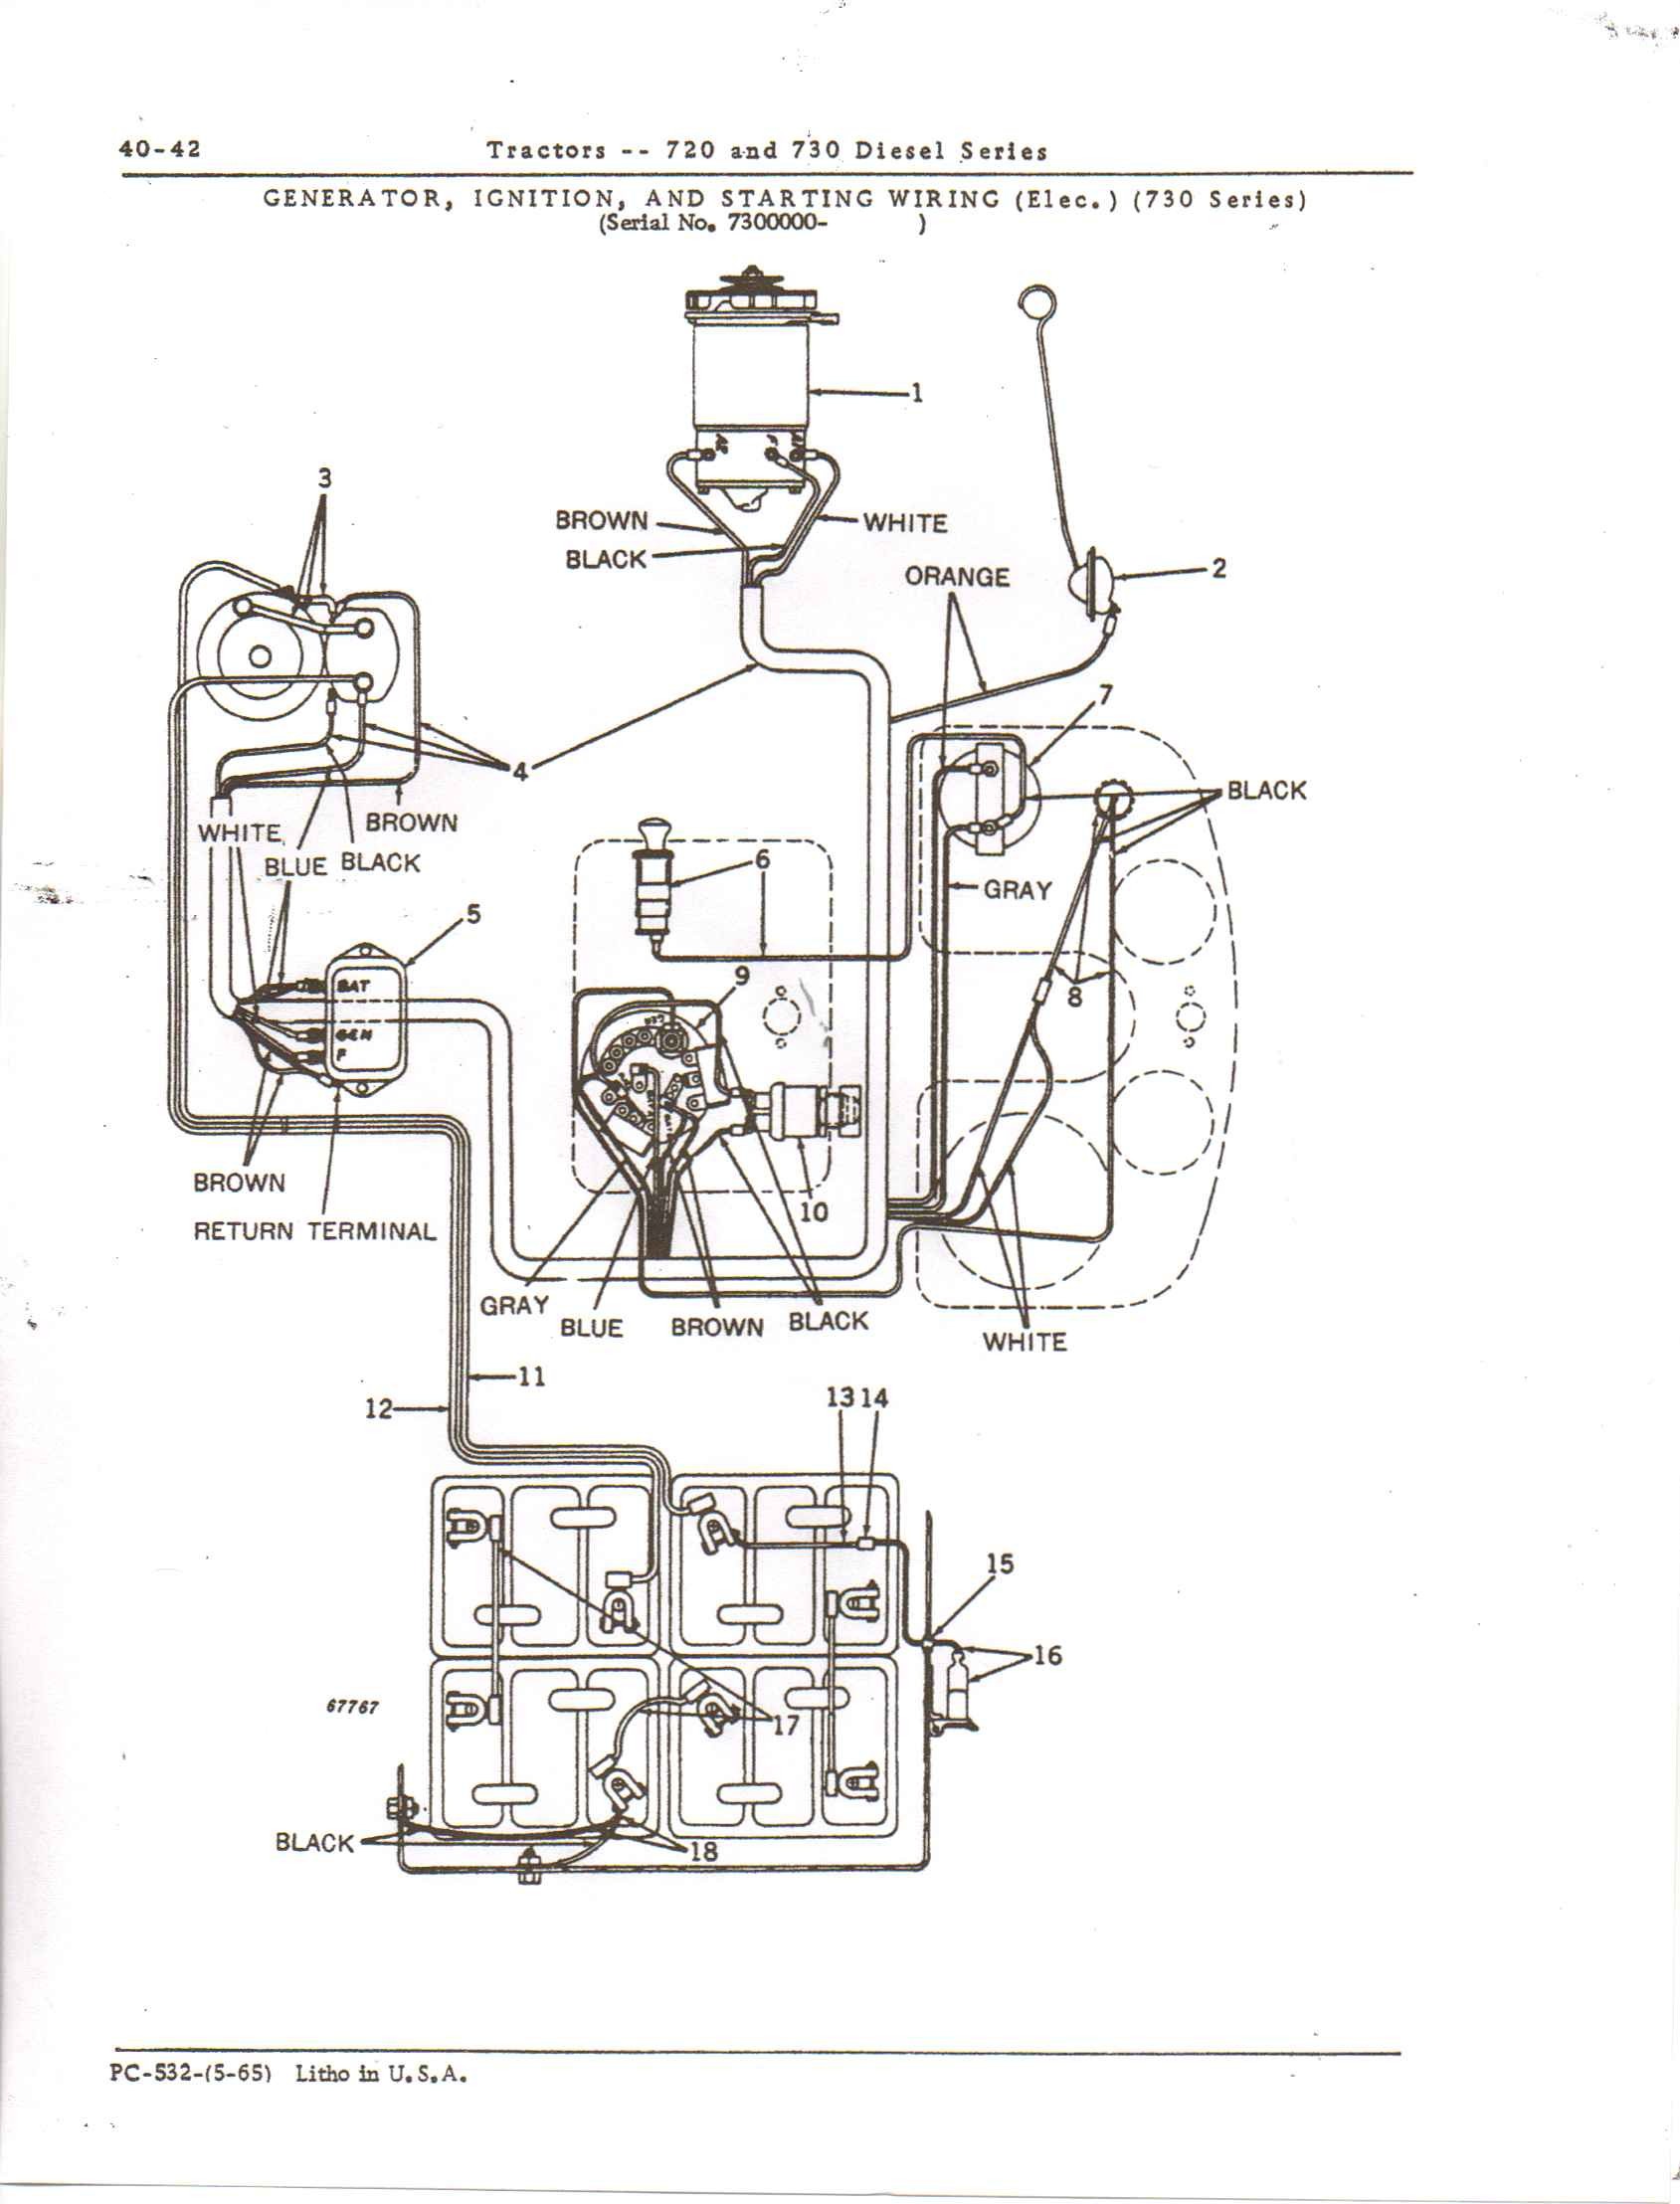 John Deere 750 Ignition Diagram Auto Wiring Diagrams Wiring Diagram For John Deere Tractor Auto